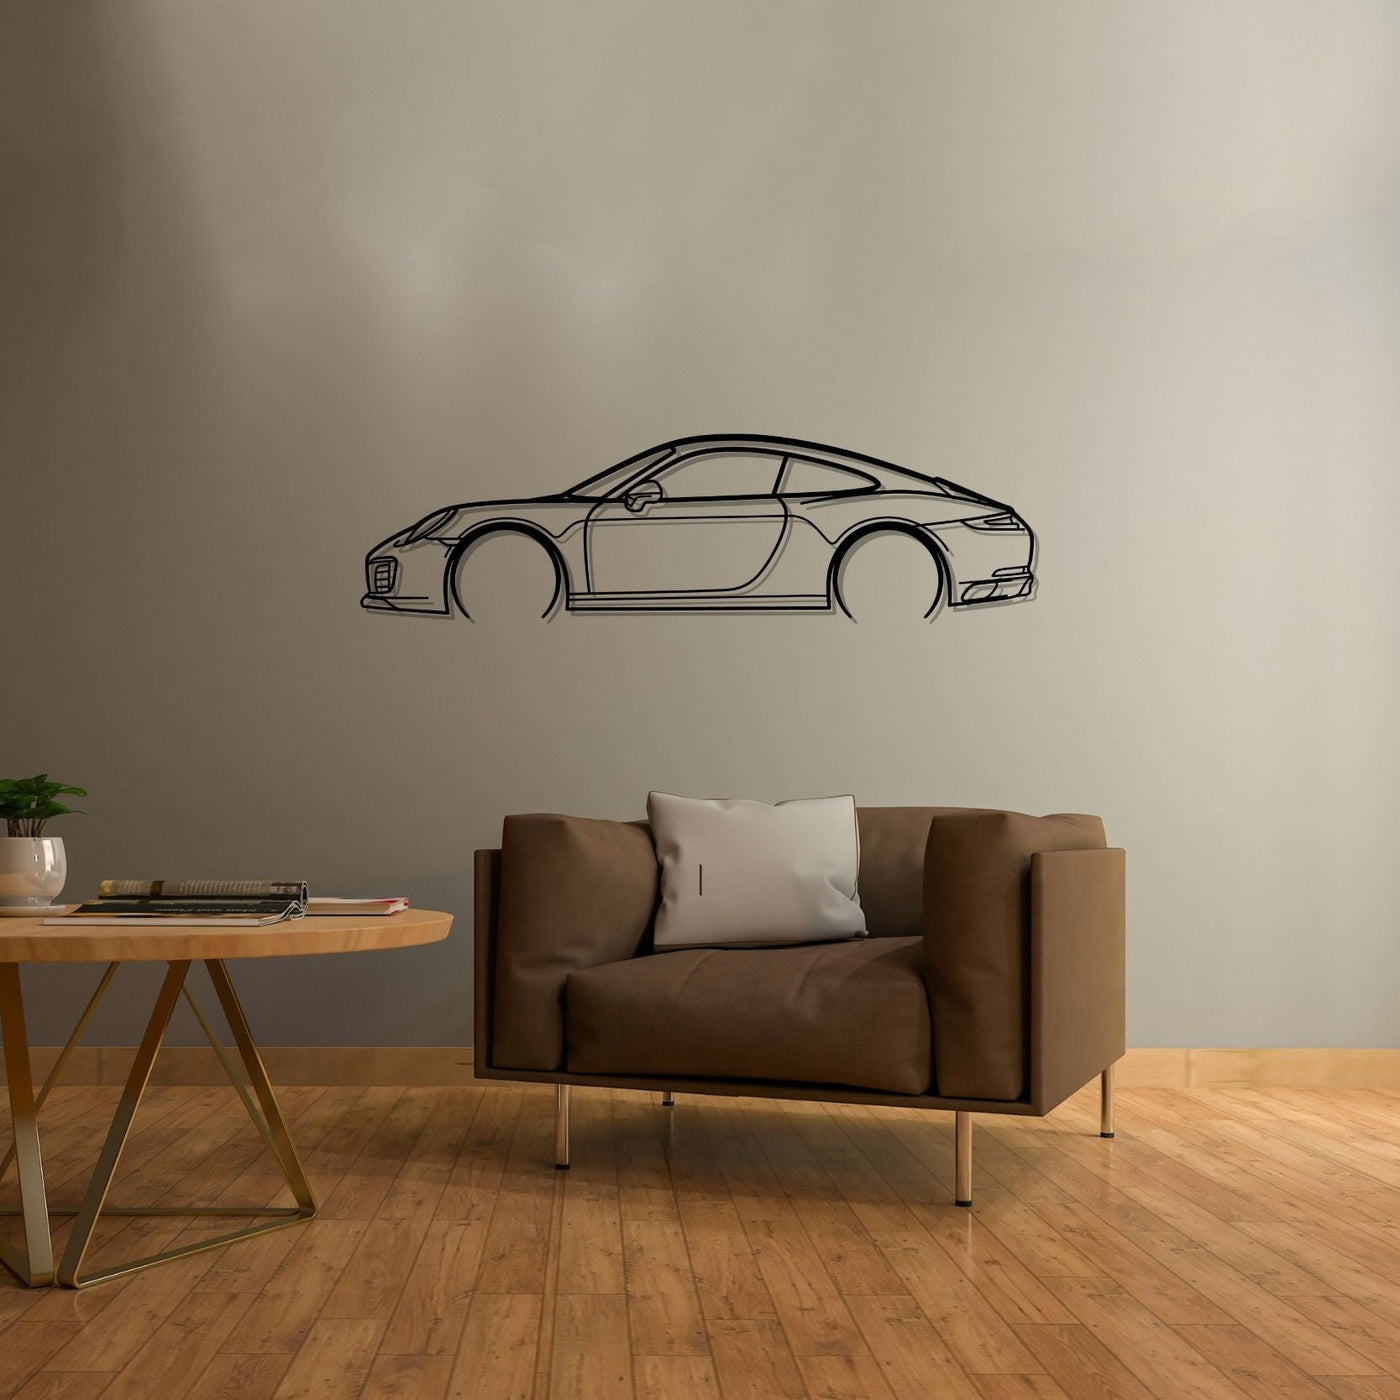 911 model 991 Detailed Silhouette Metal Wall Art